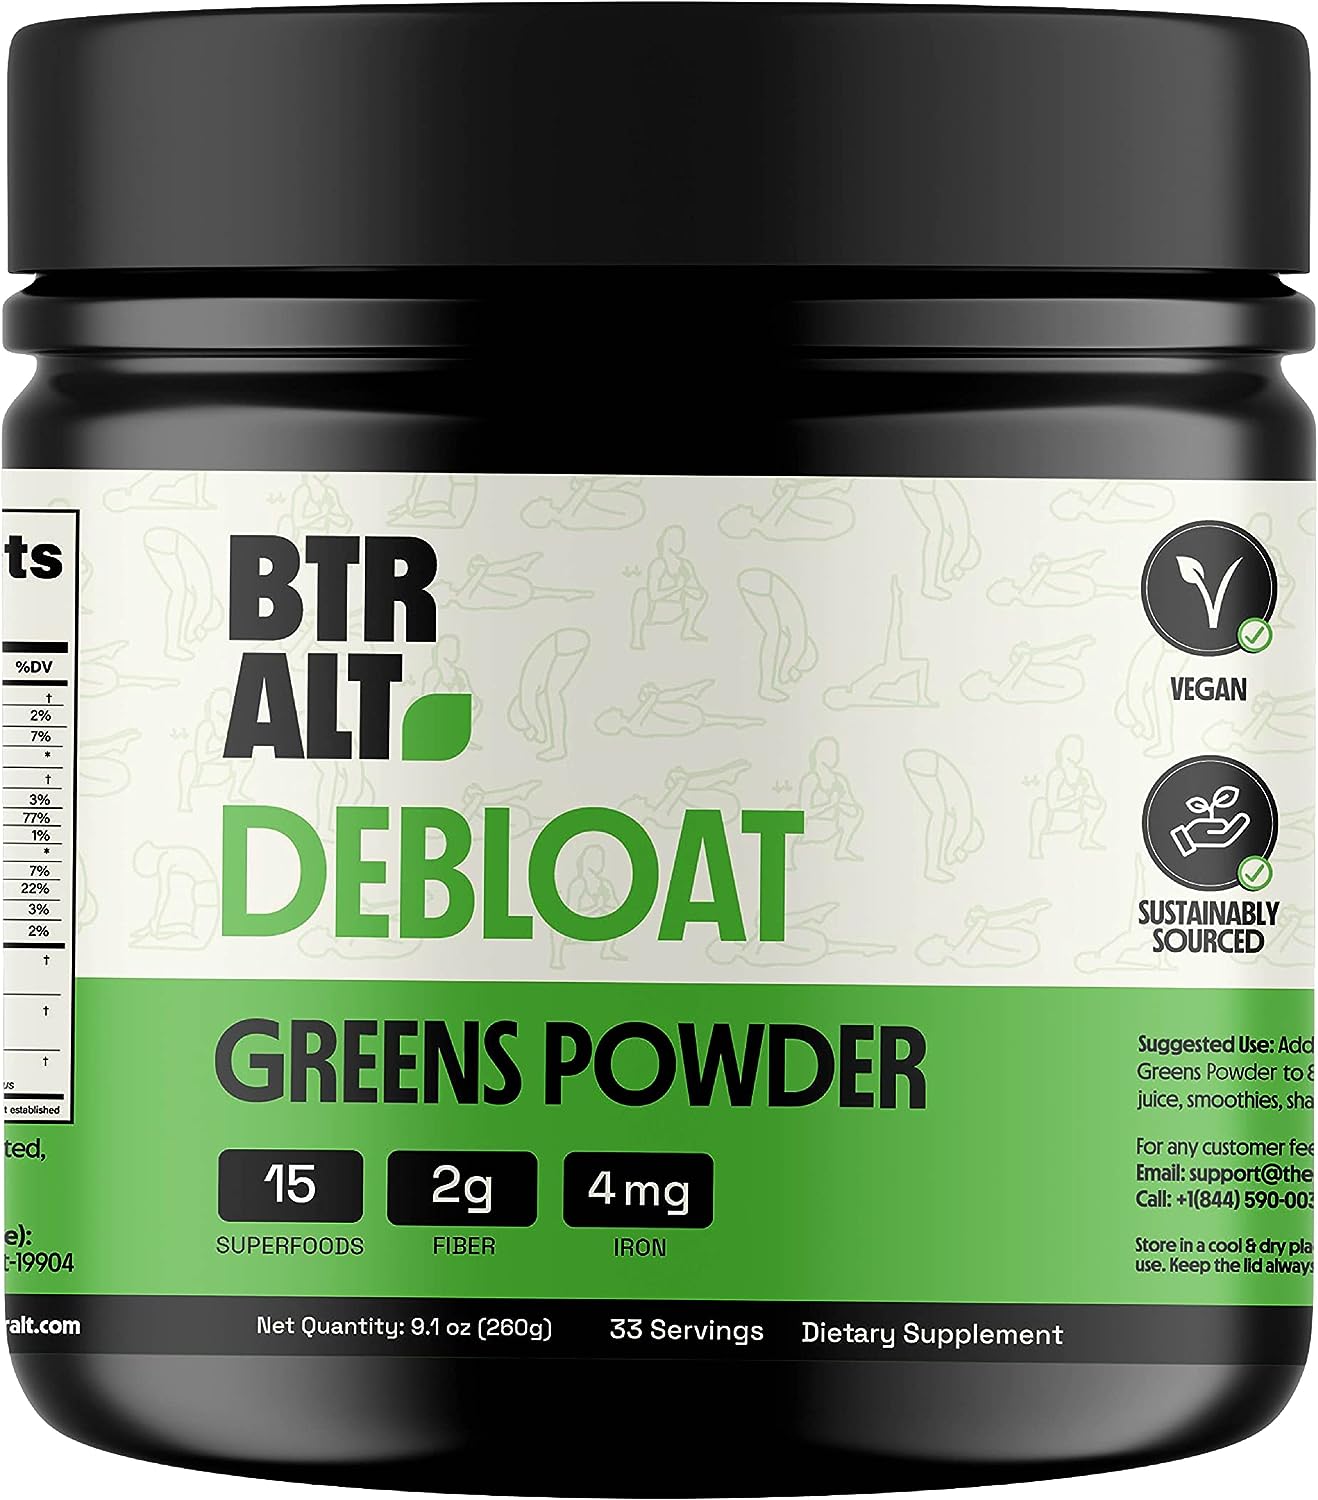 Better Alt Greens Powder, Helps Reduce Bloating, 15 Super Greens- Blend of Spirulina, Moringa More, Vegan Super Greens Powder to Debloat, Detox Green Superfood Powder, 33 Servings